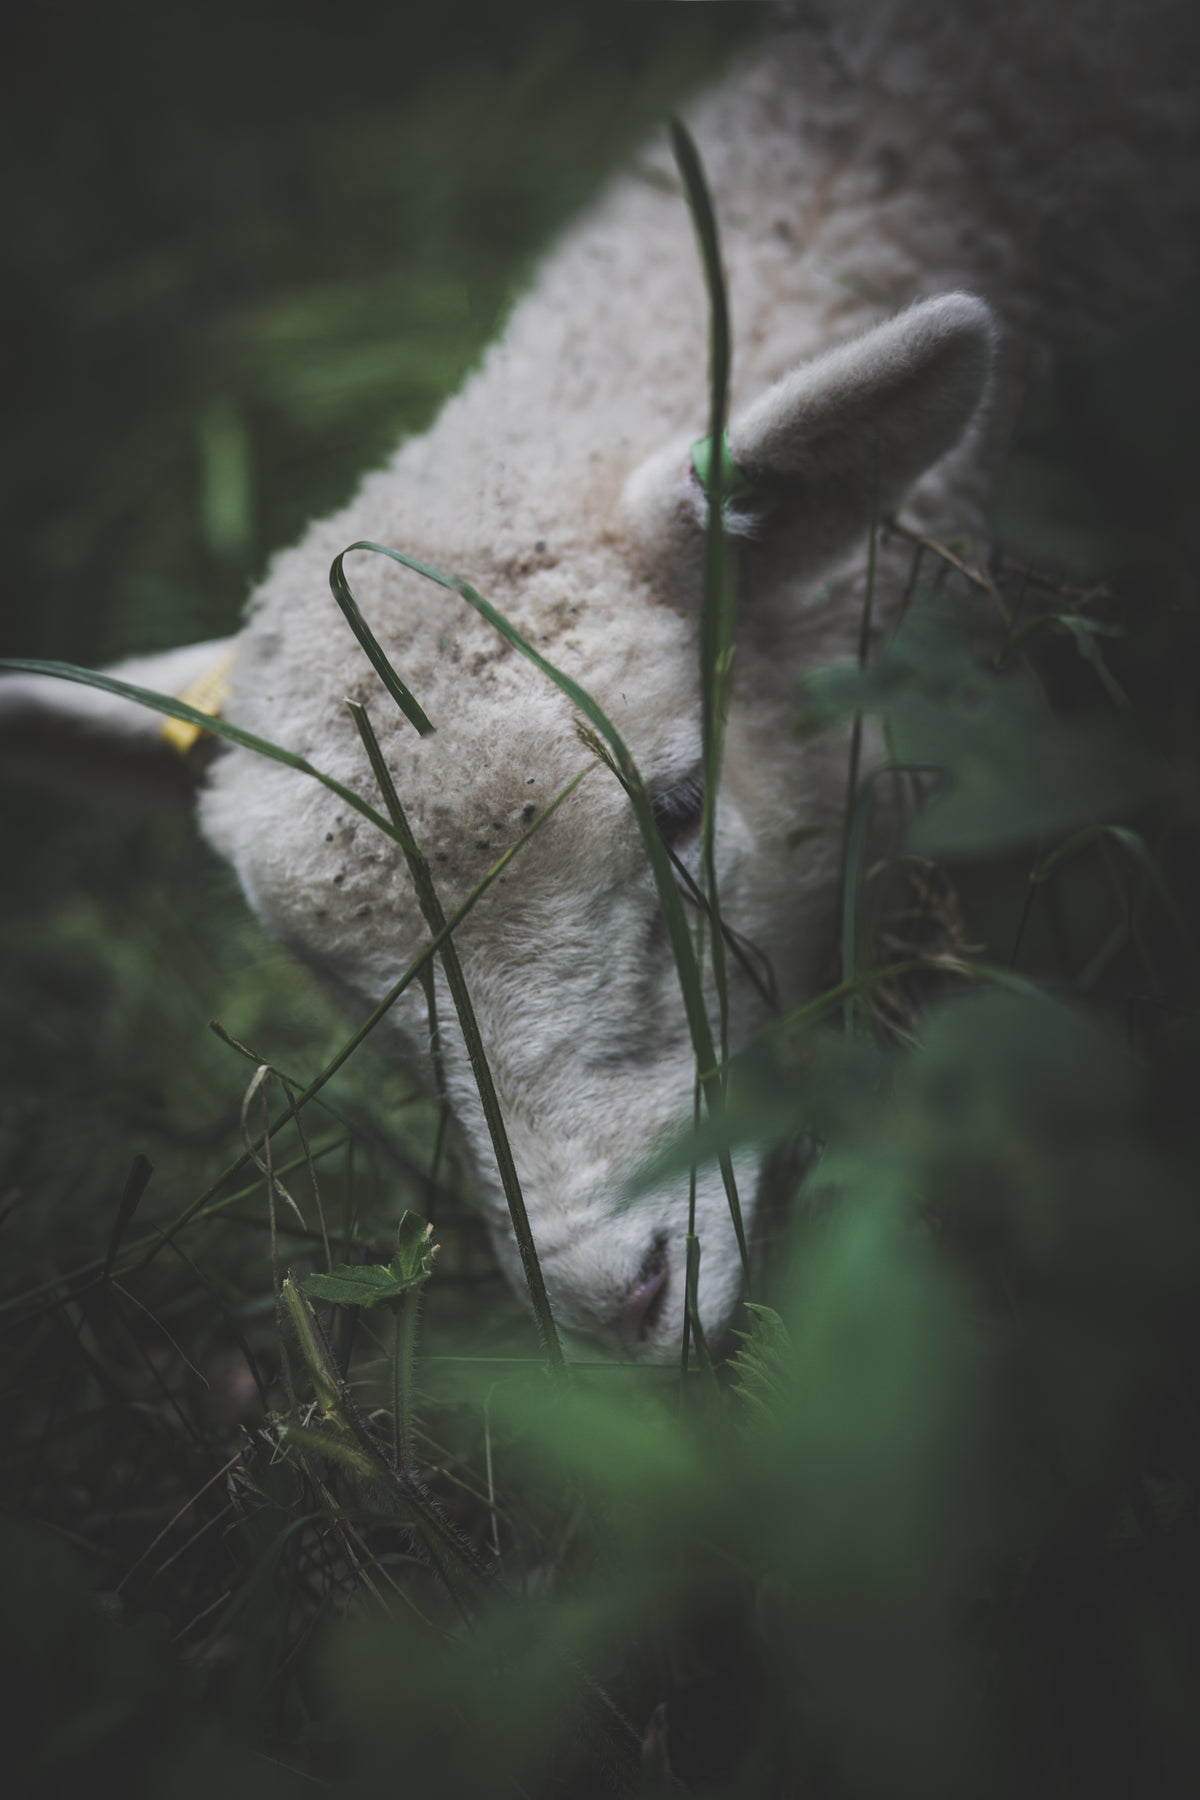 a grazing sheep in grass